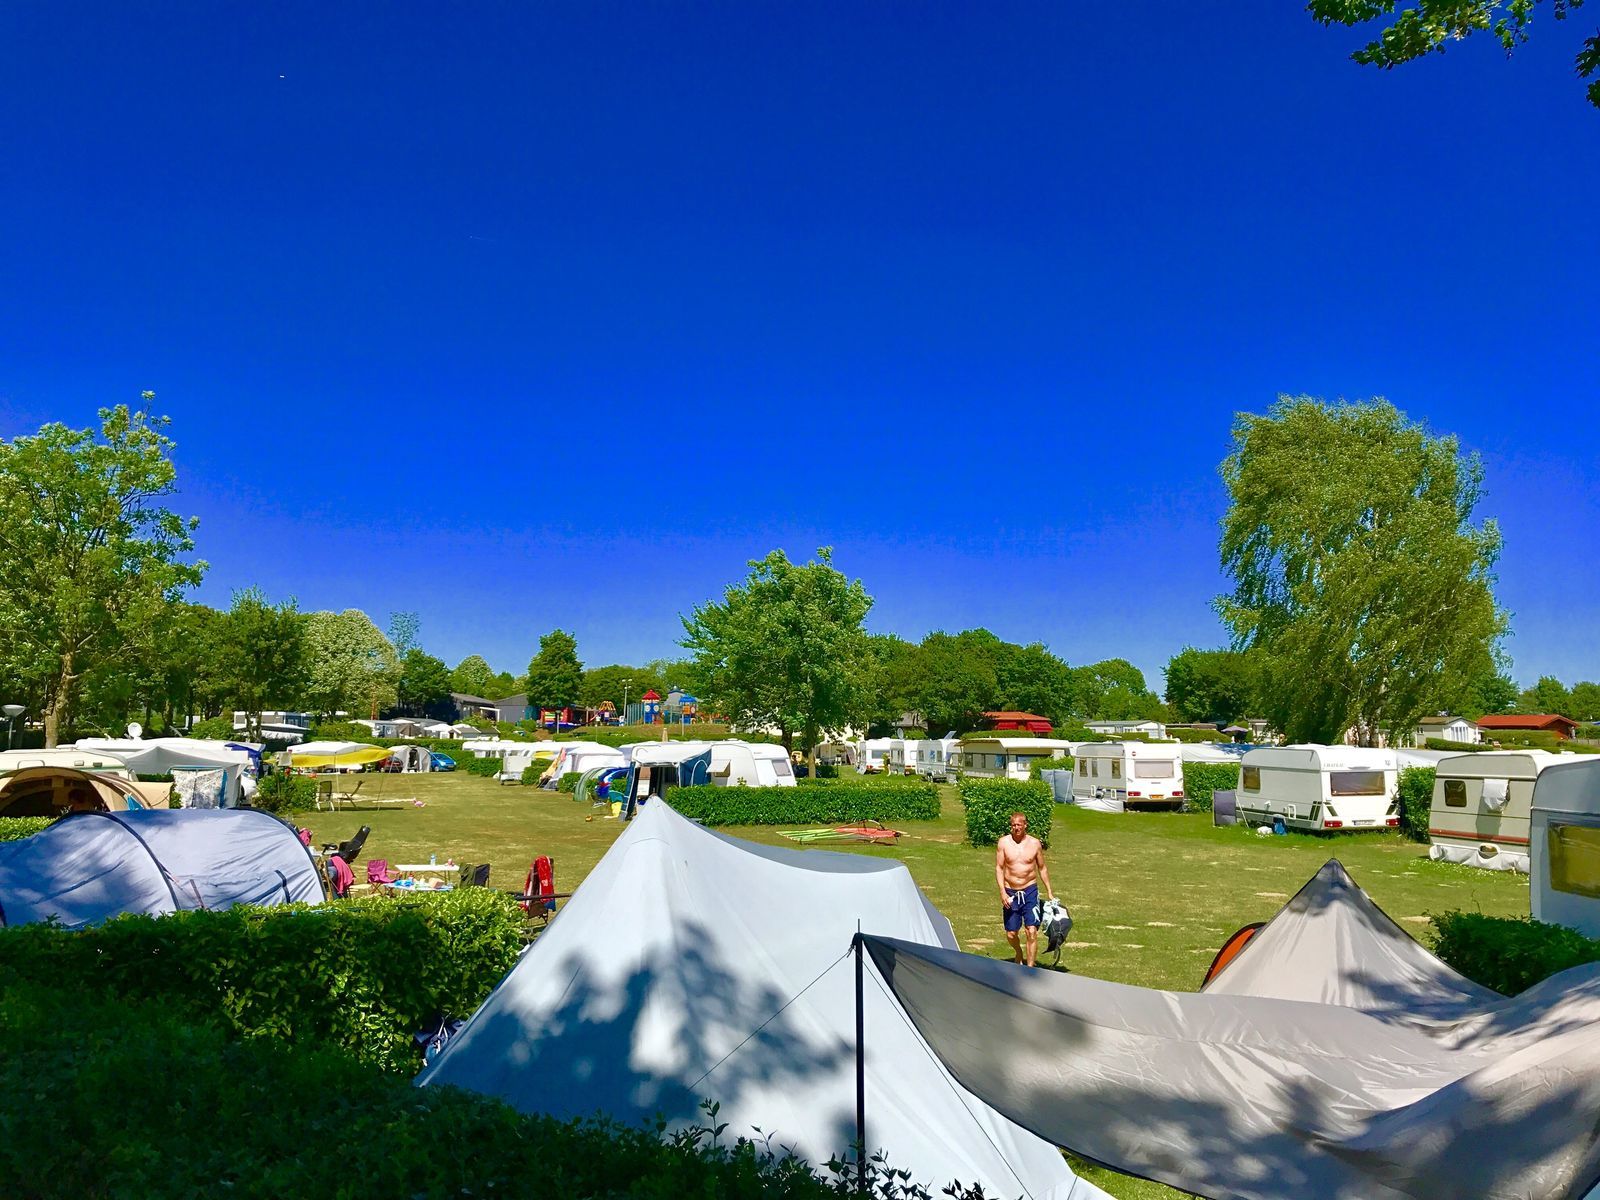 Camping-Stellplatz auf dem Feld am inneren Ring